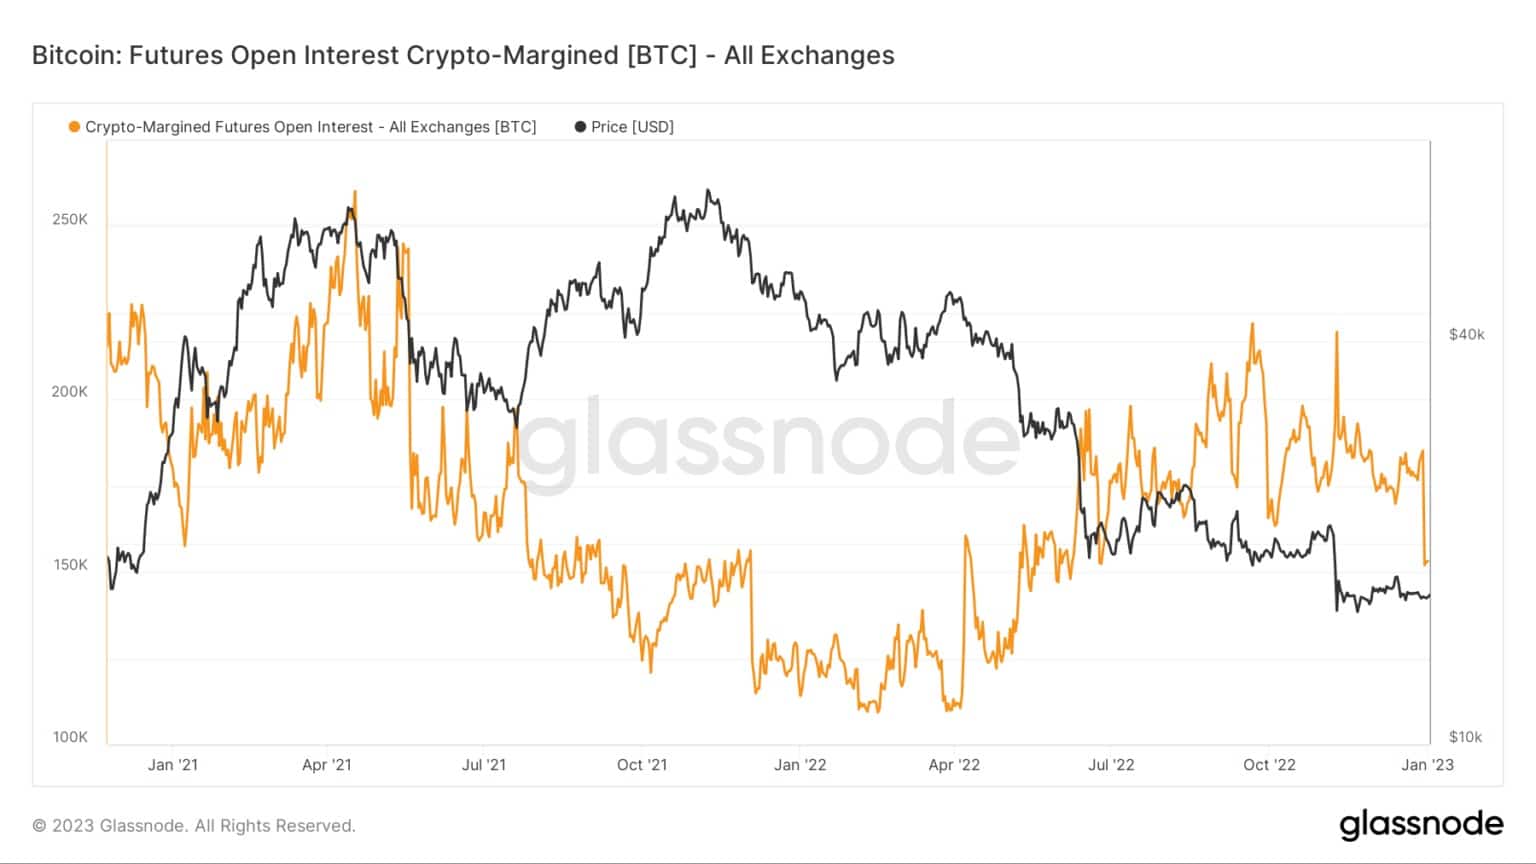 Bitcoin: Futures Open Interest crypto-Margined [BTC] - Bron: Glassnode.com